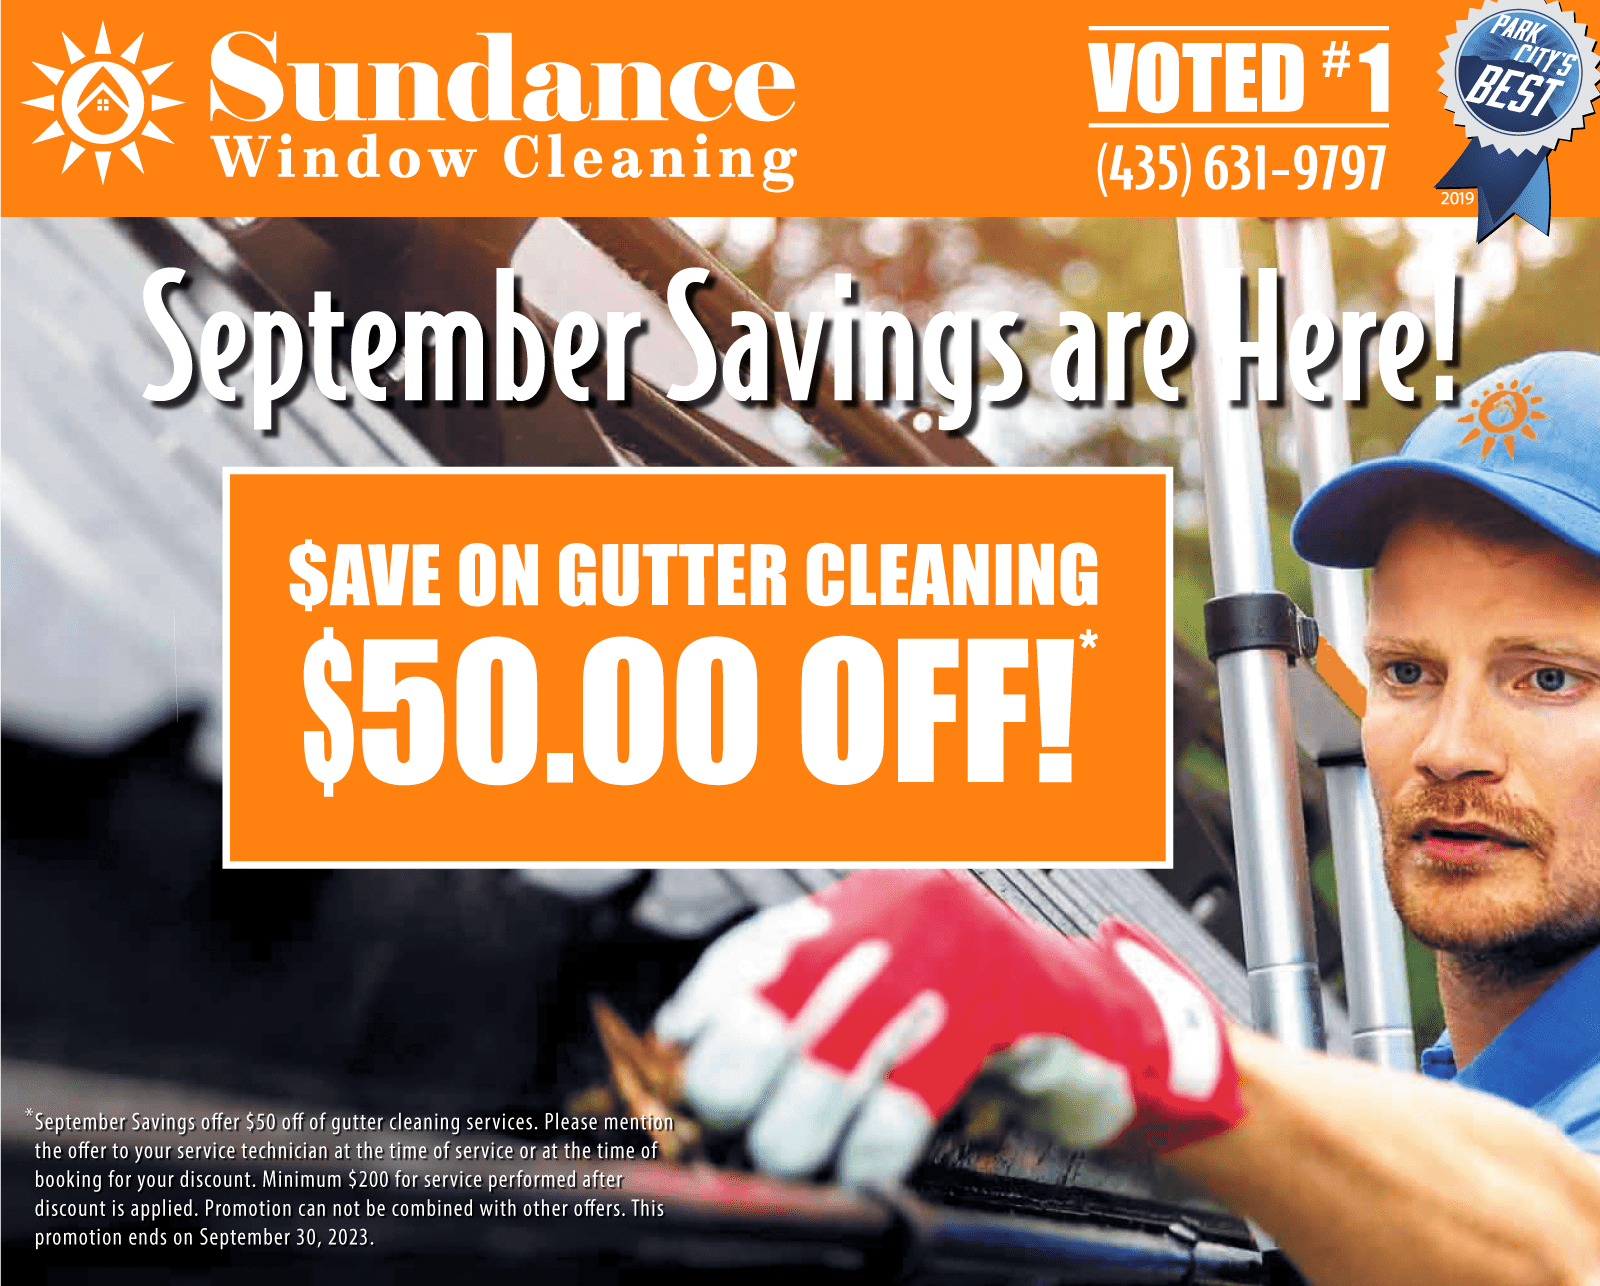 Sundance Window Cleaning - Fall Savings